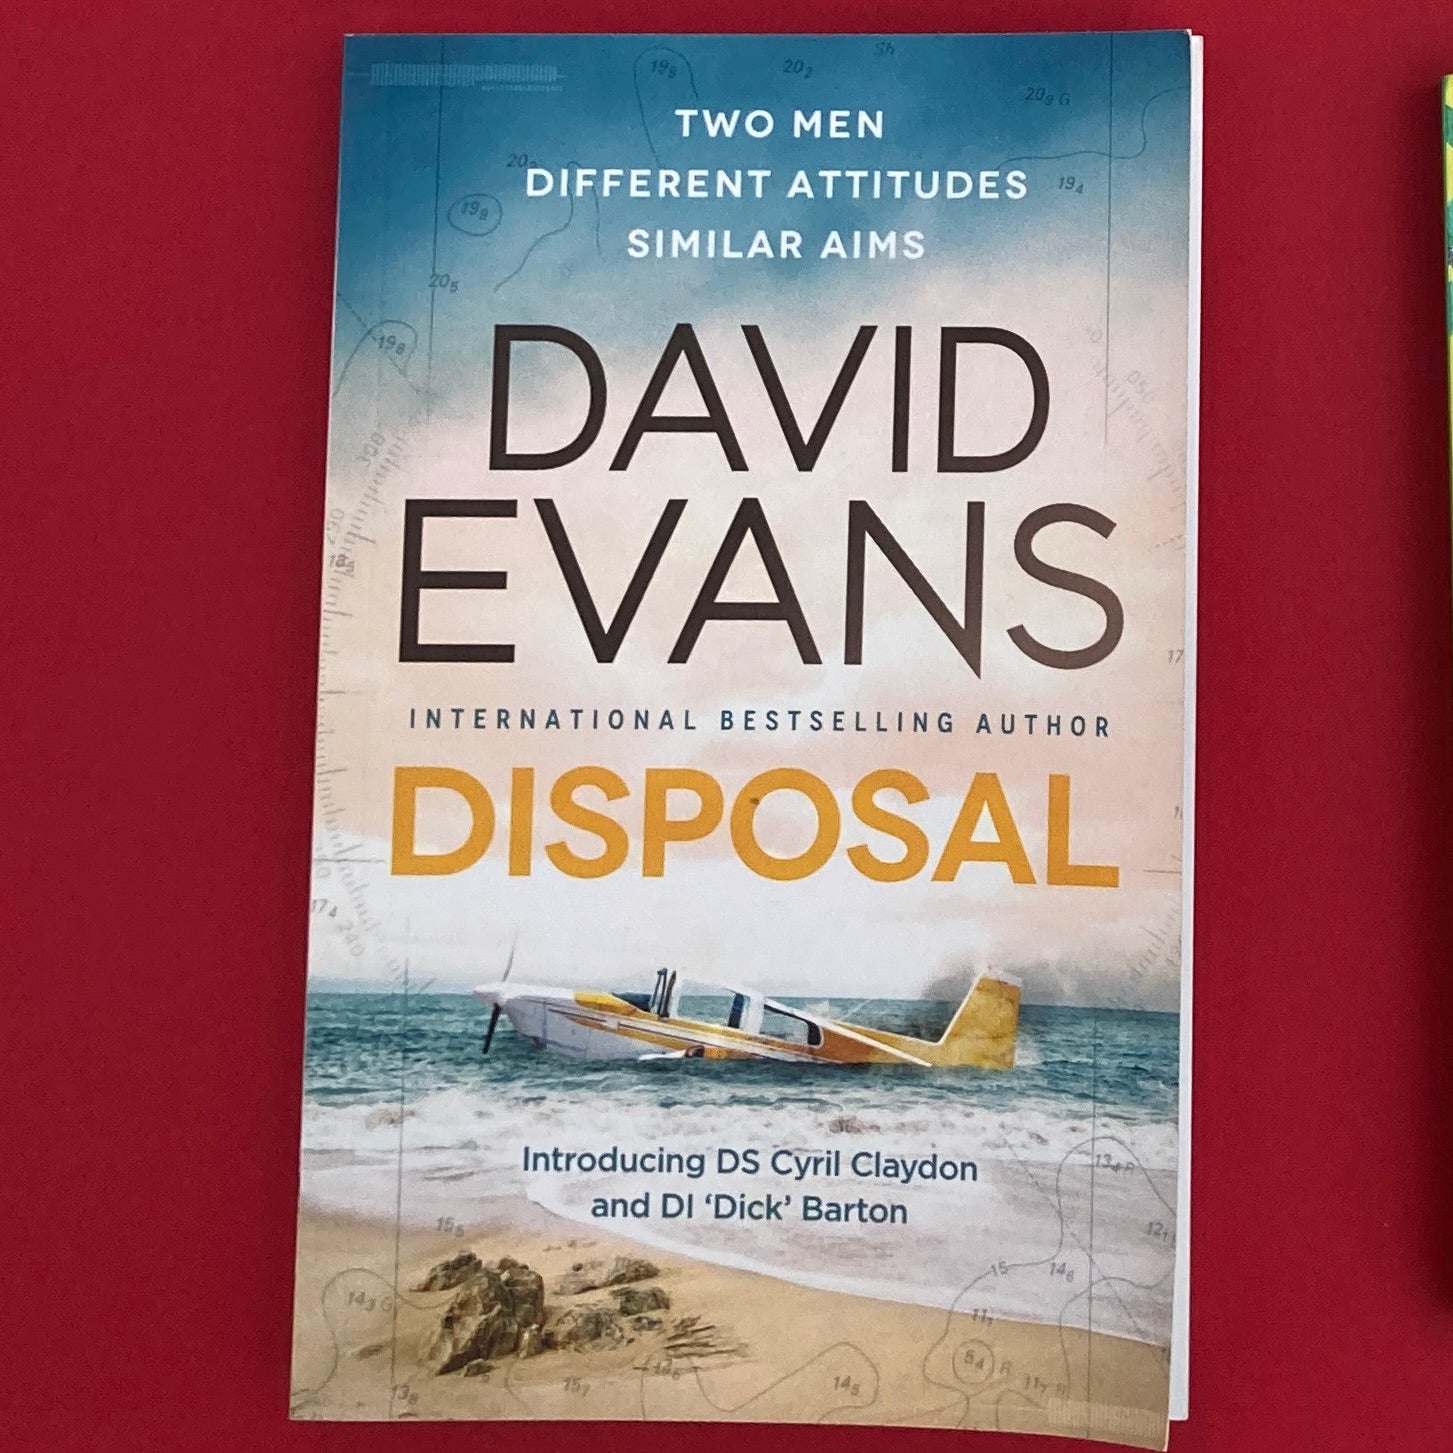 Disposal by David Evans